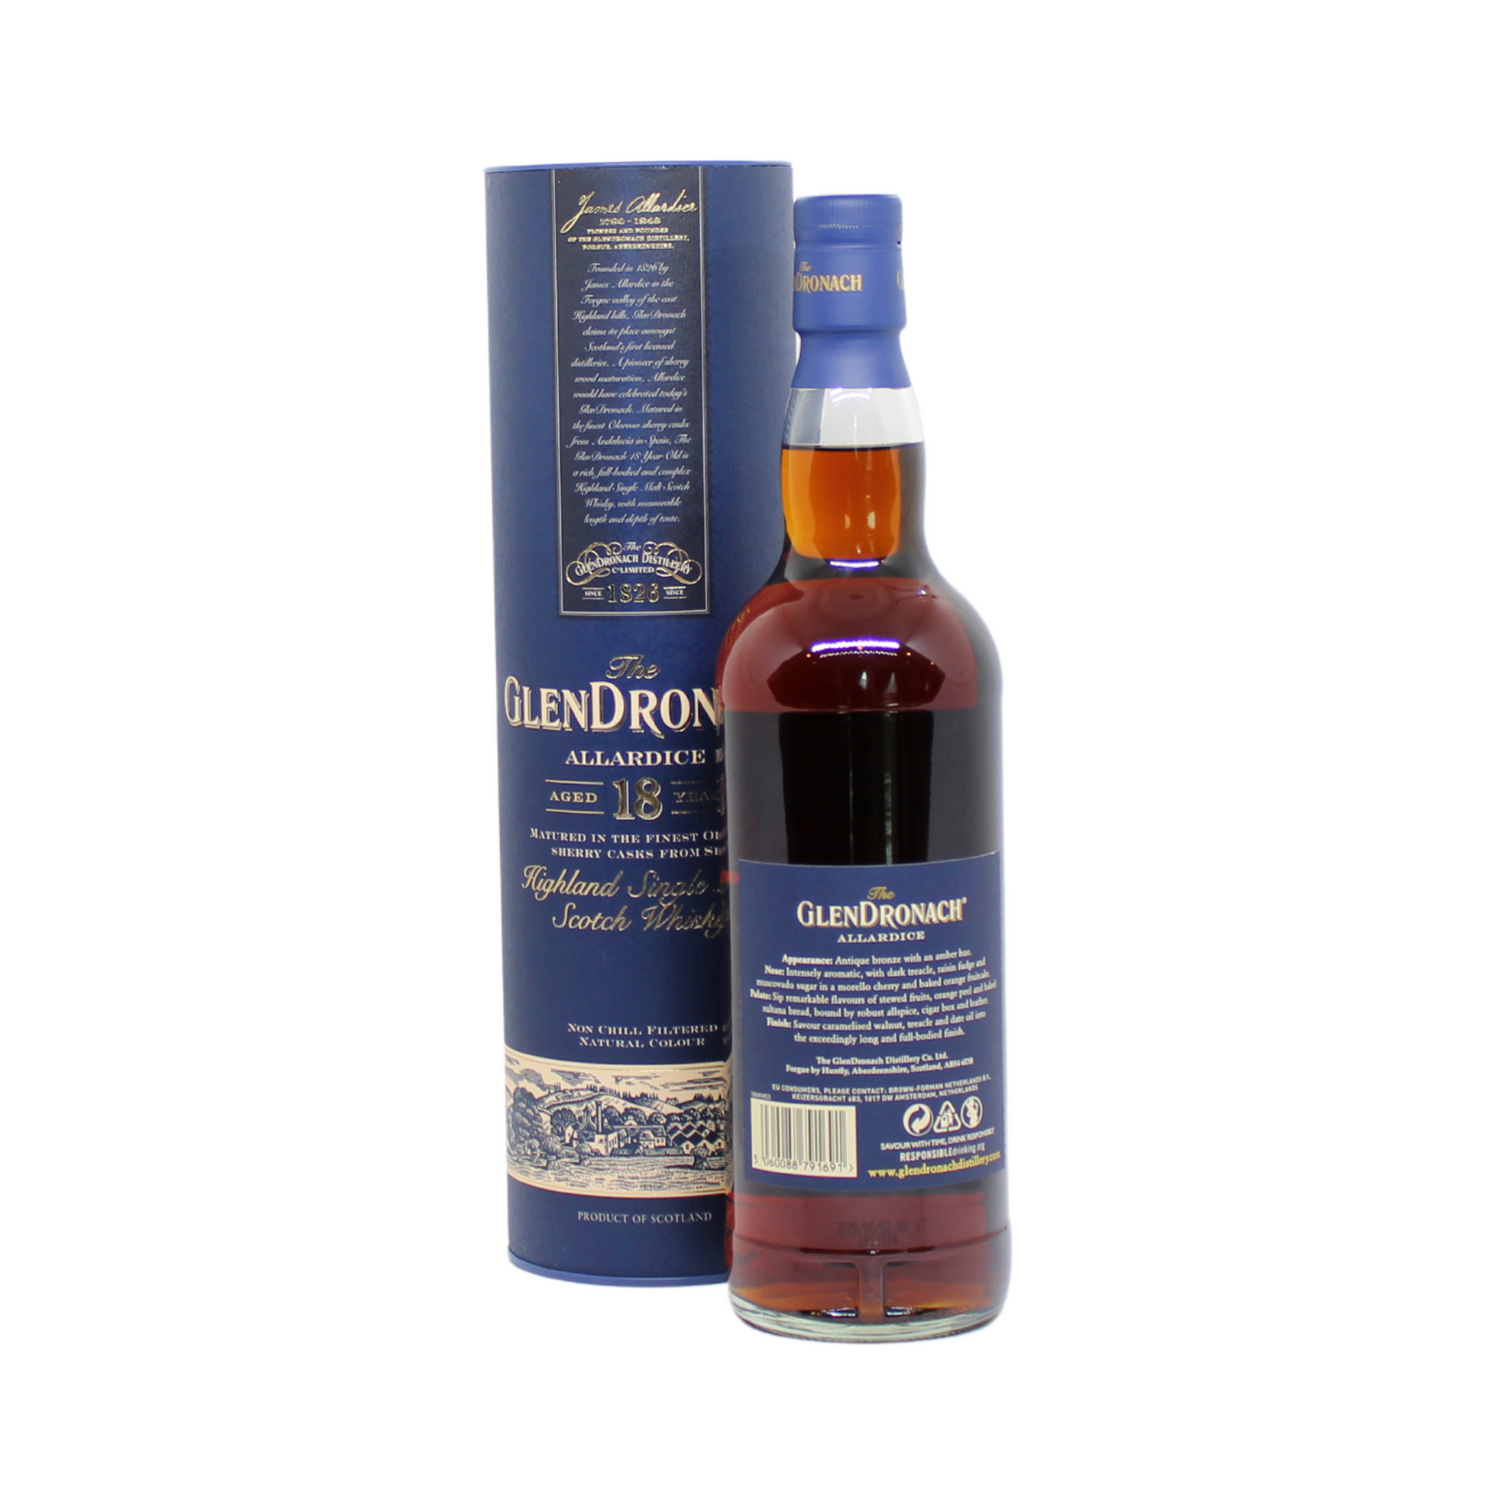 Glendronach Allardice 18 Years Old "Non-Chill Filtered" Single Malt Scotch Whisky 2020 Release